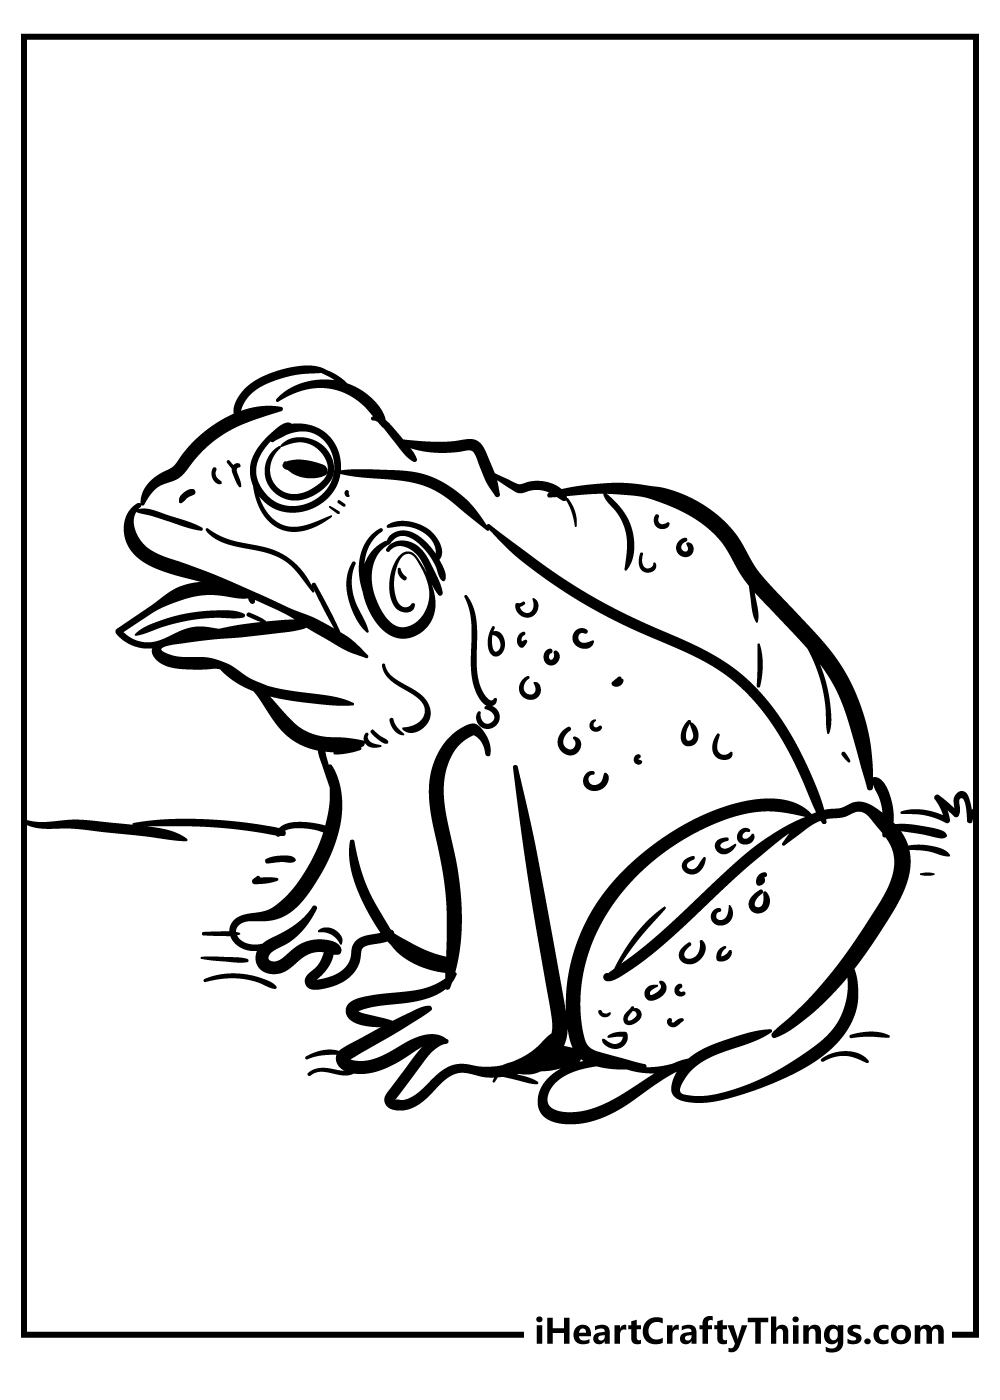 Toad Coloring Original Sheet for children free download